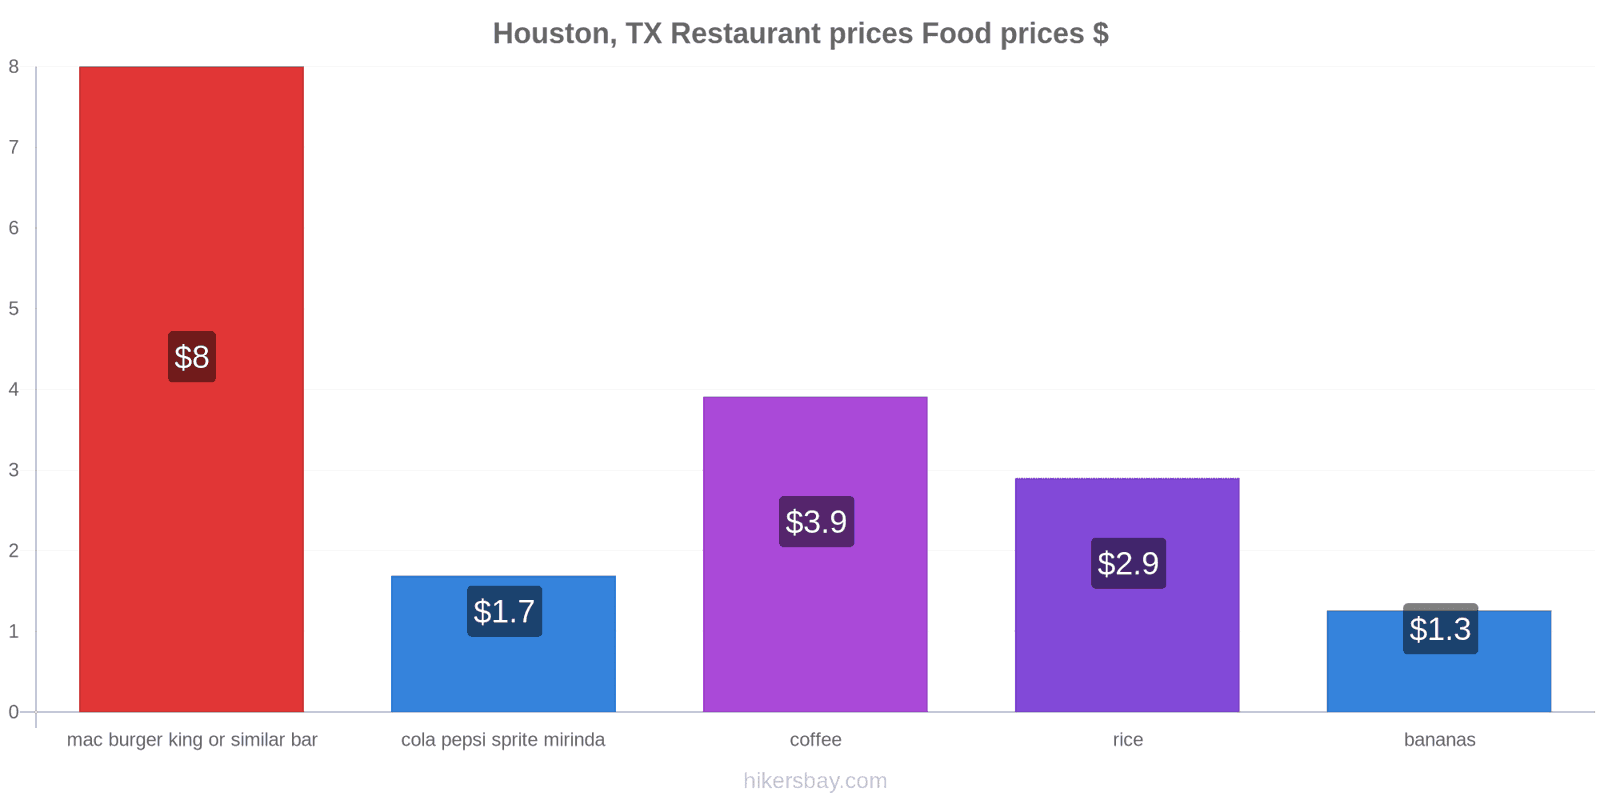 Houston, TX price changes hikersbay.com